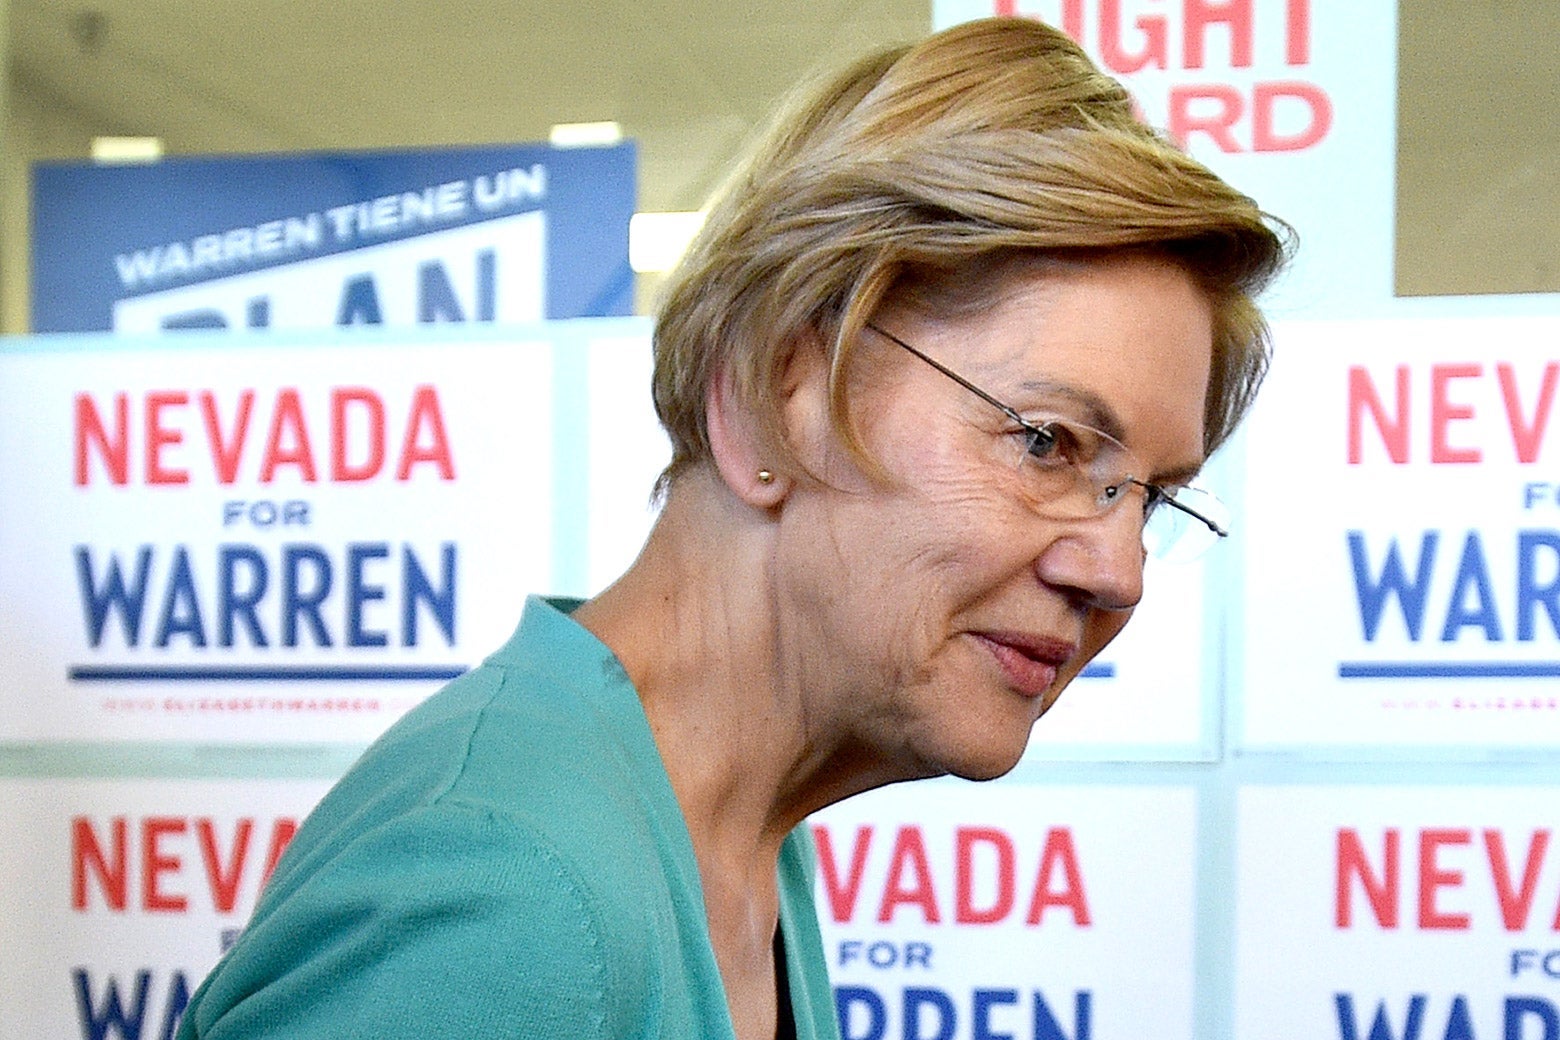 Elizabeth Warren, viewed in profile, with signs that say "Nevada for Warren" behind her.